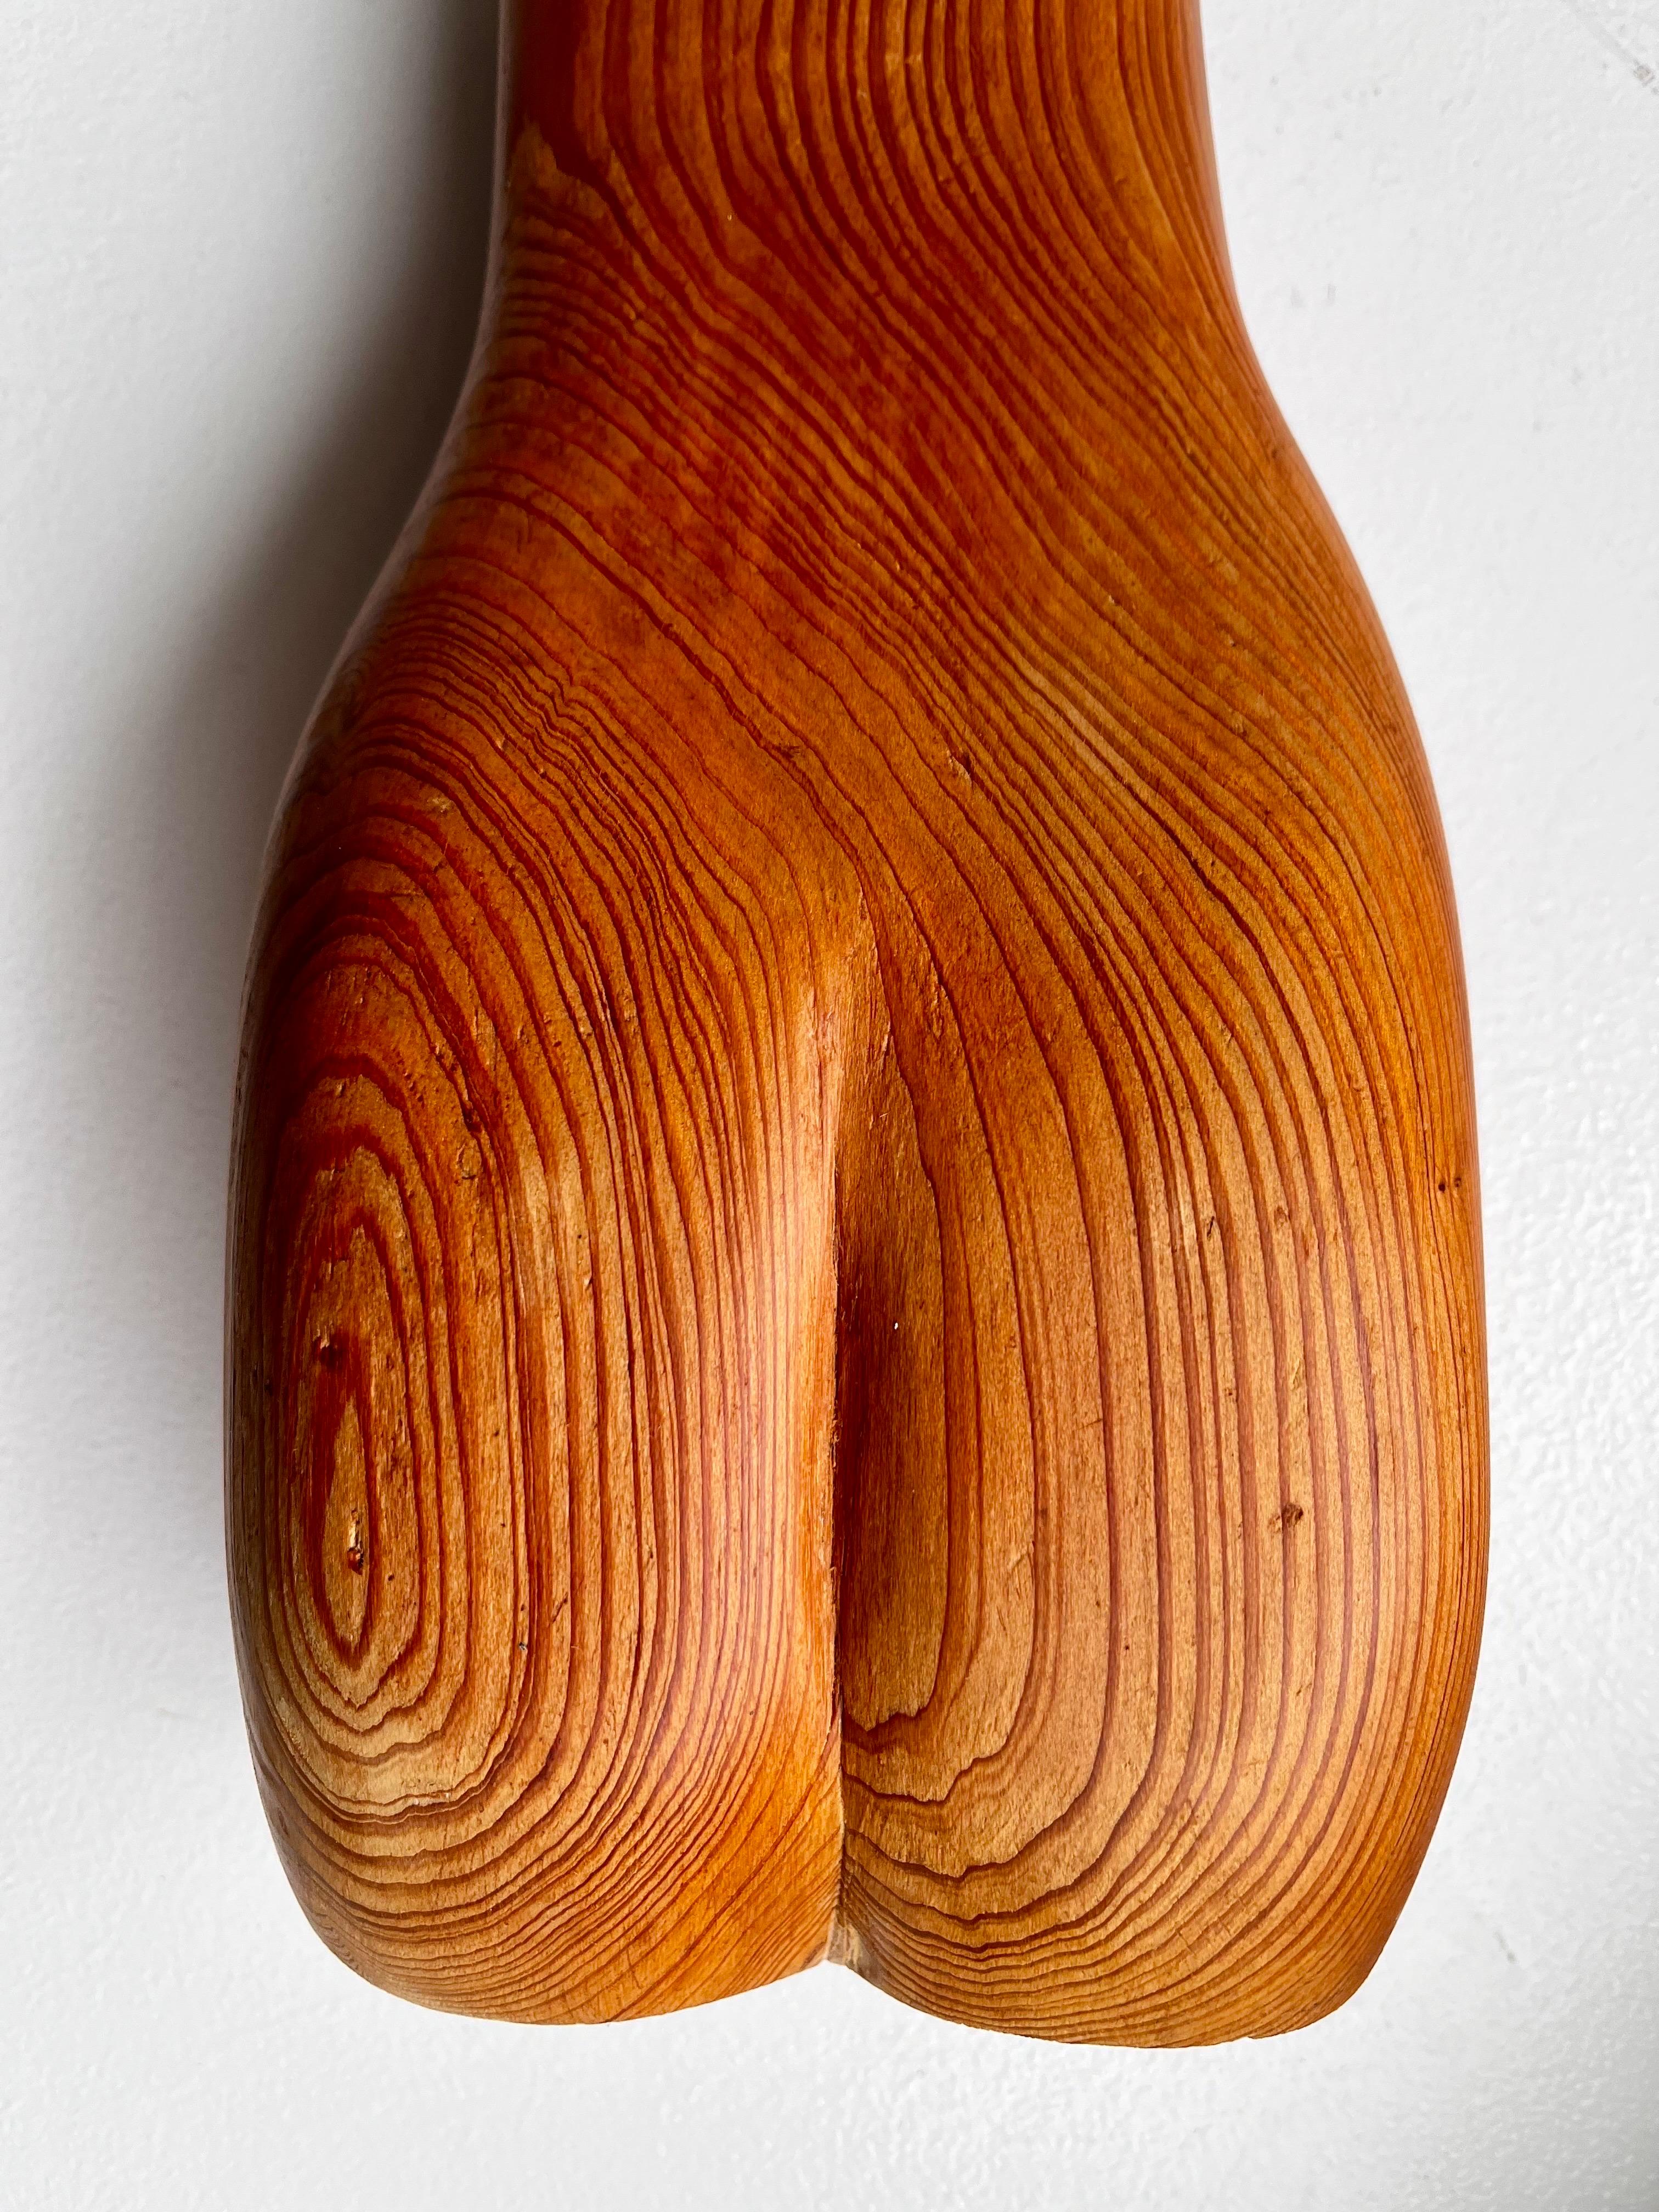 Primitive Modernist Wood Sculpture of Female Nude For Sale 2